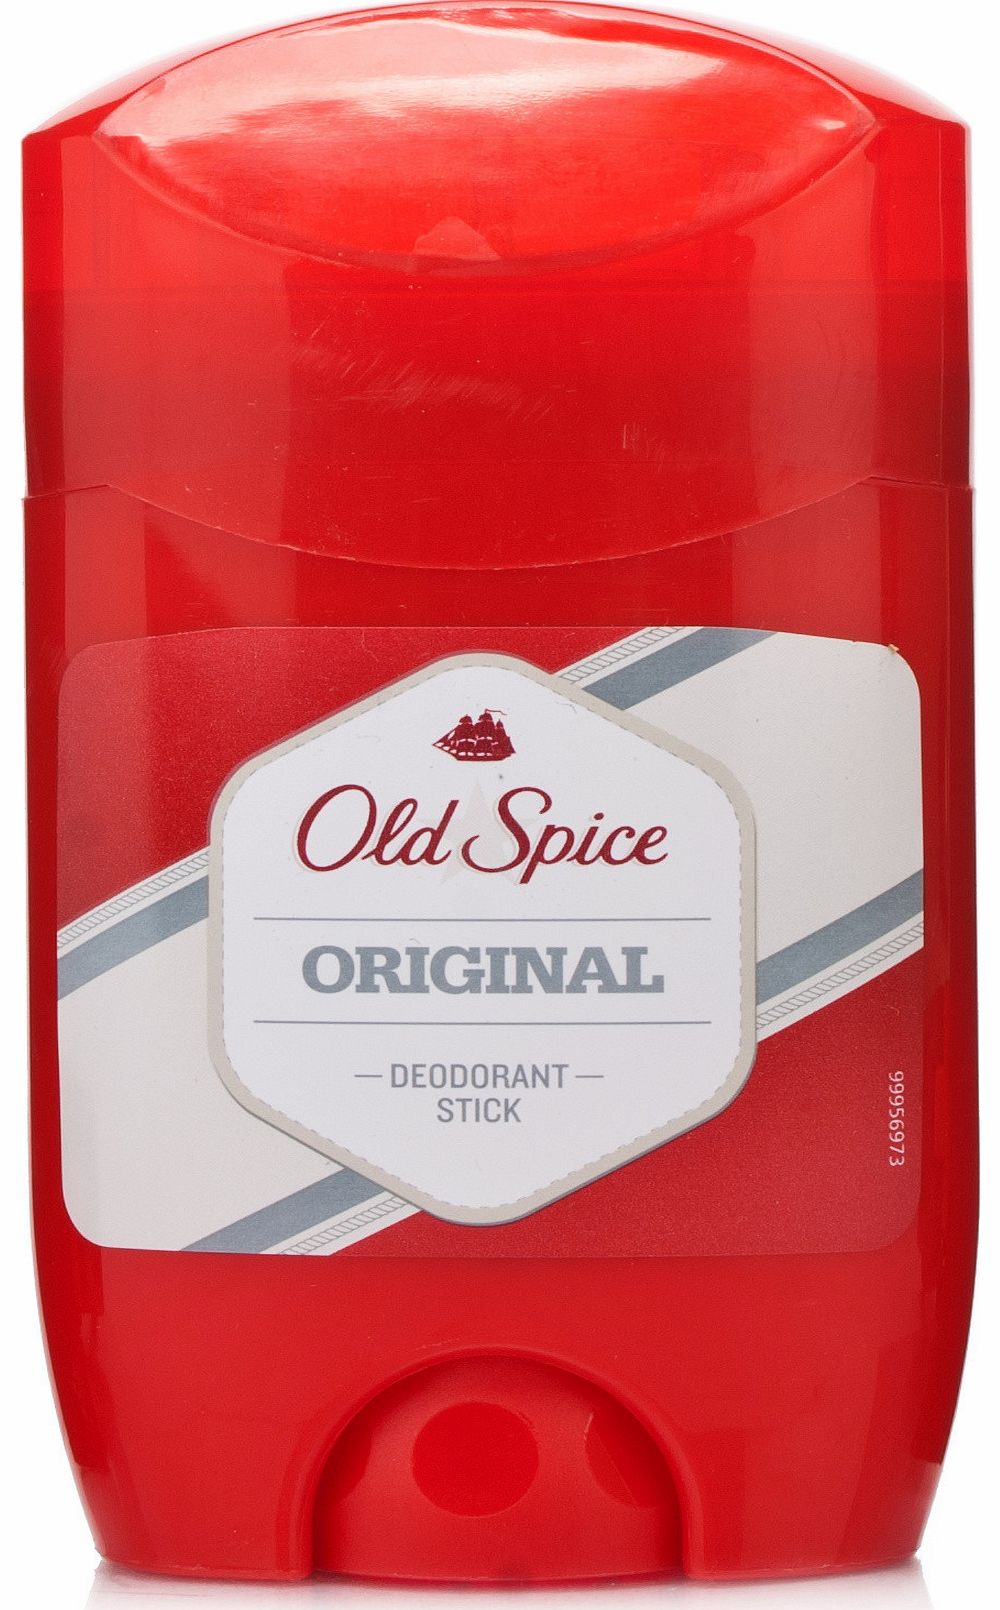 Old Spice Original Deodorant Stick